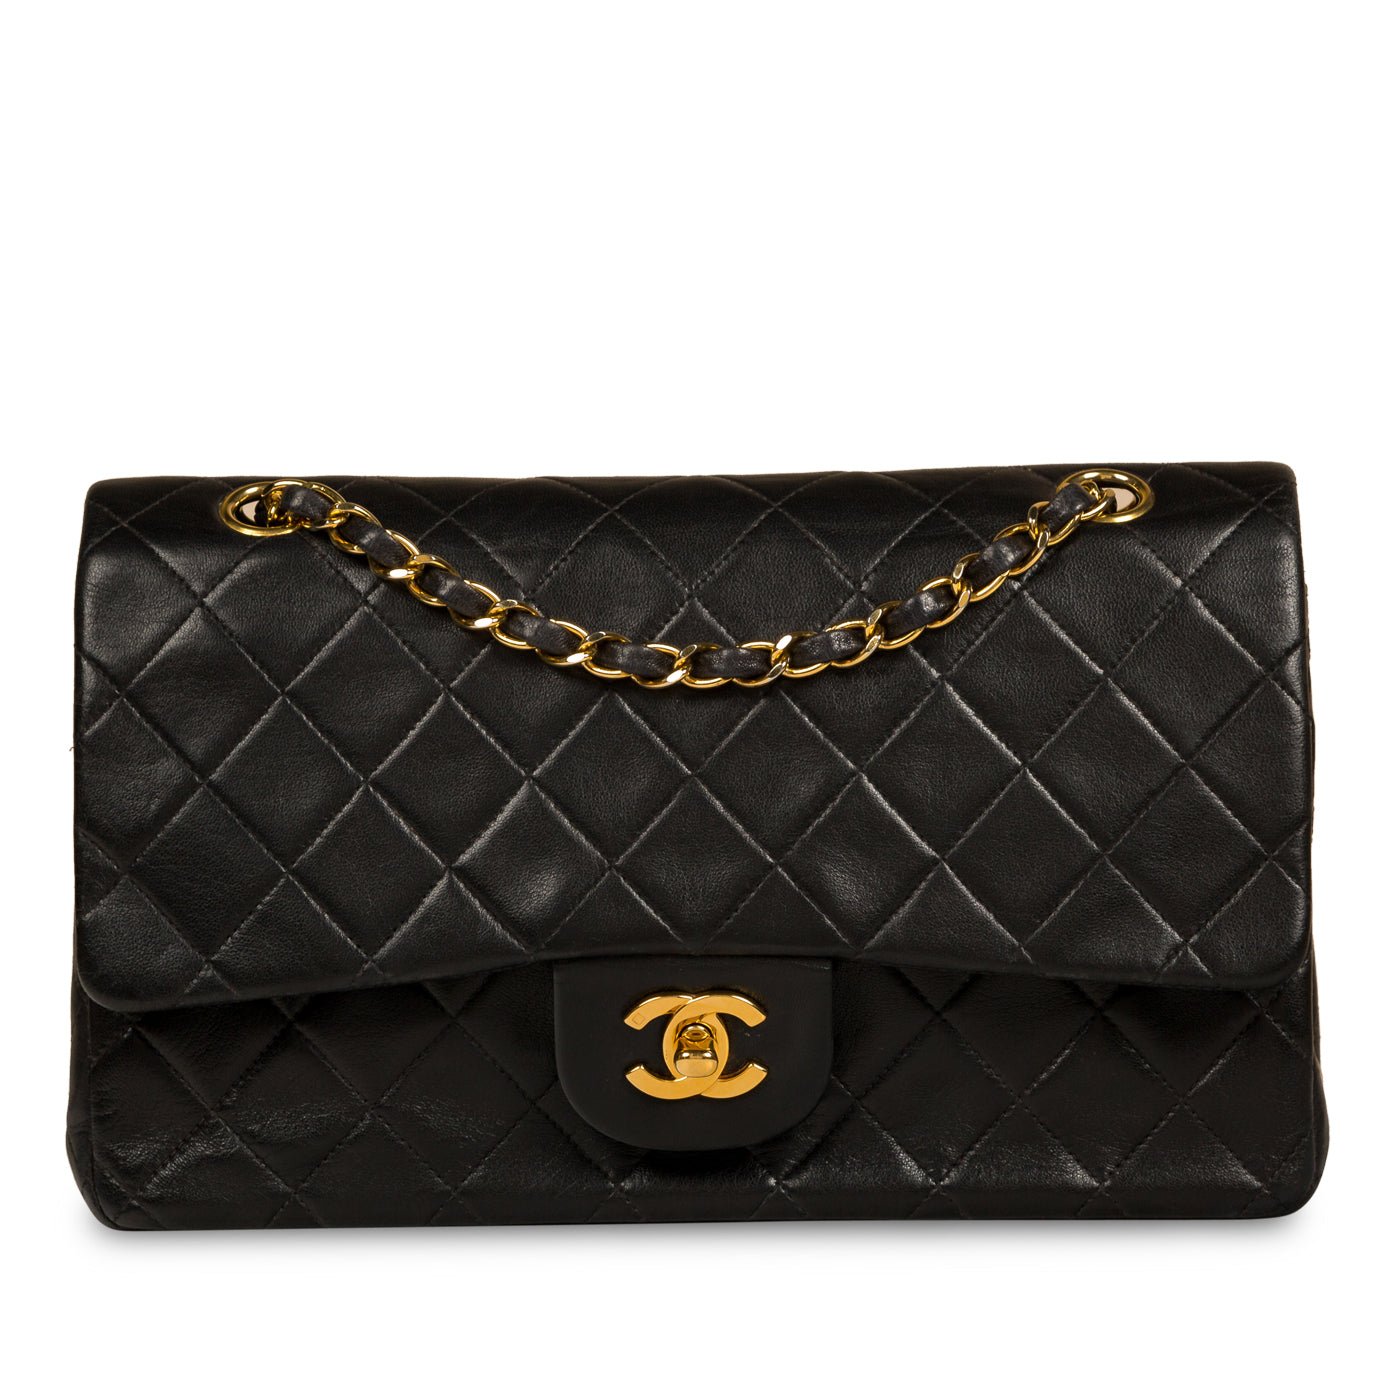 Chanel - Classic Flap Bag - Medium - Black Lambskin - GHW - Pre